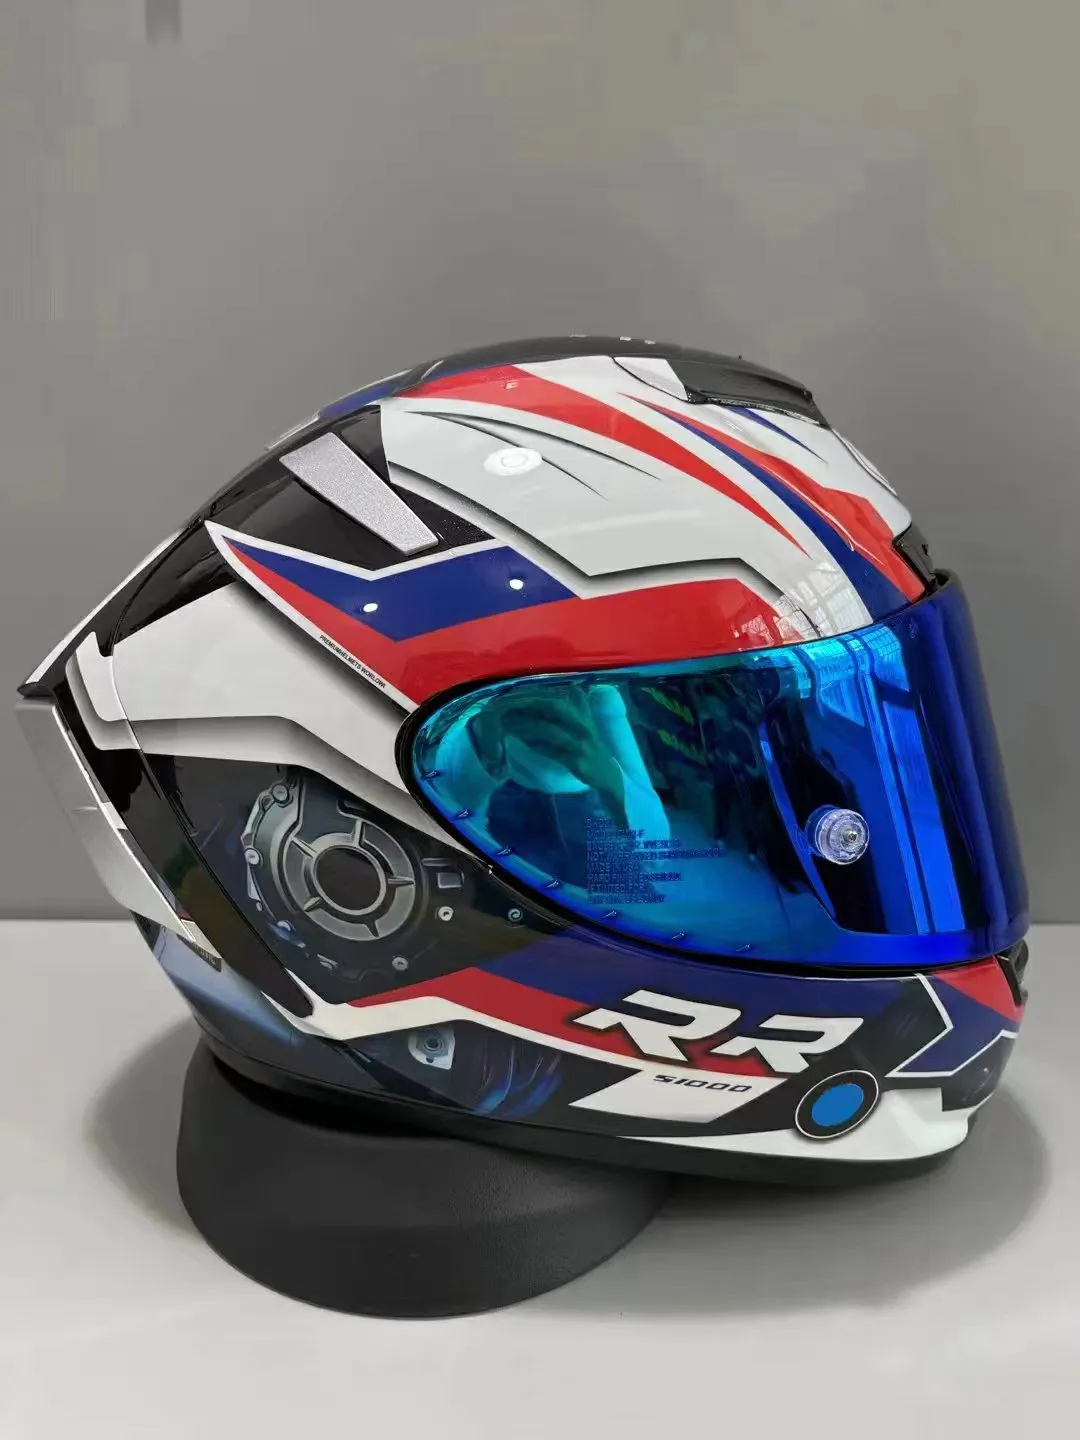 Blue Motorcycle Helmet Anti Fog Visor, Anti Slip, Stylish Riding Accessory  For Car And Motocross From Cyhelmet, $145.73 | DHgate.Com